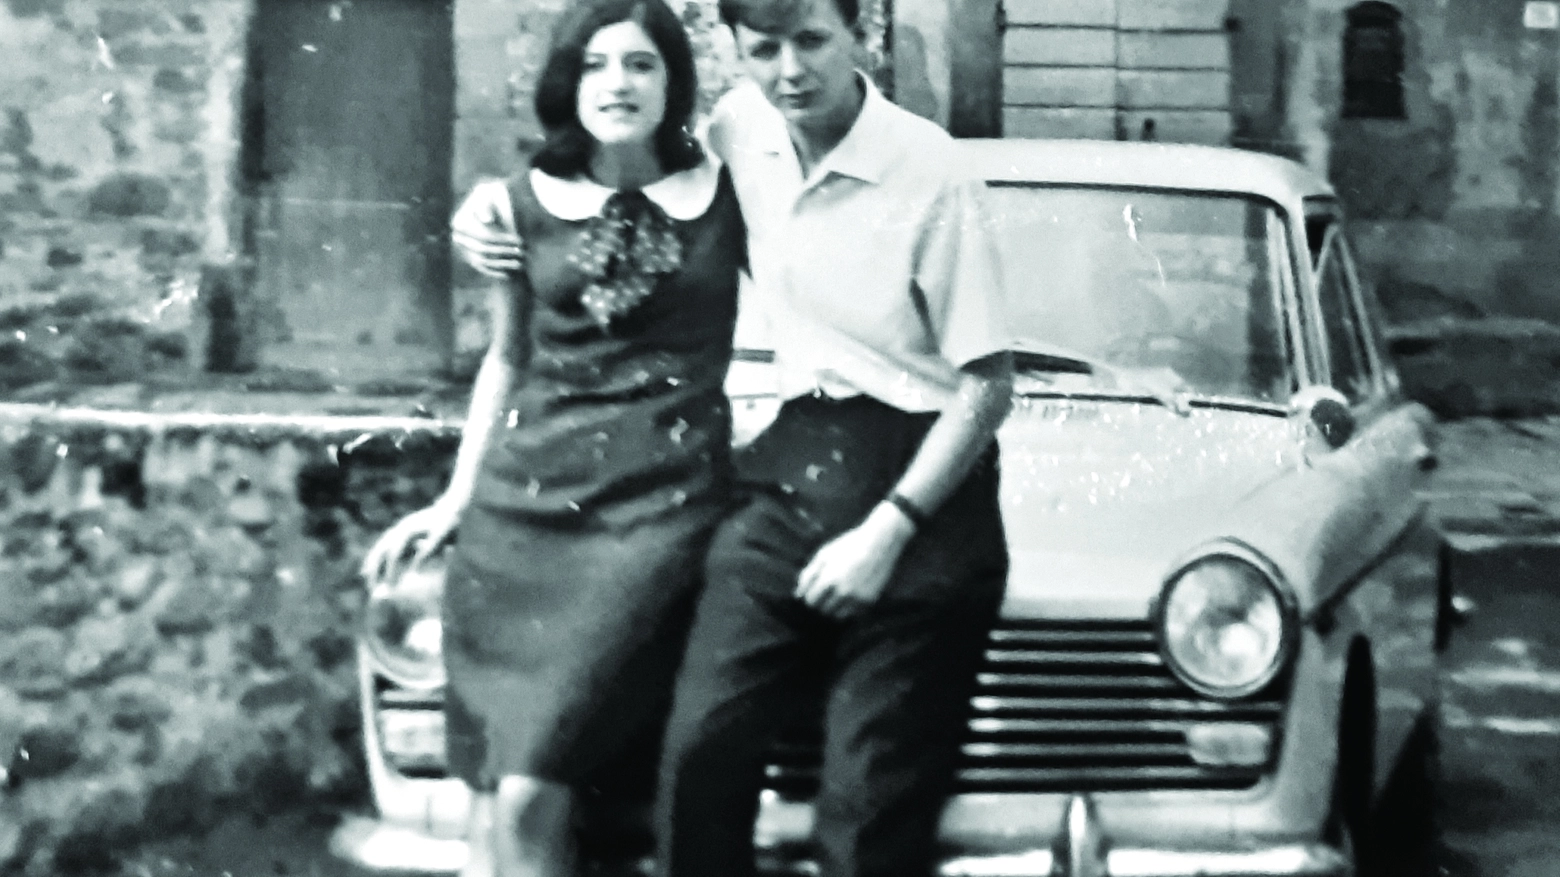 Giuseppe Orsi e sua moglie Miriam nel 1963, quando si erano appena conosciuti